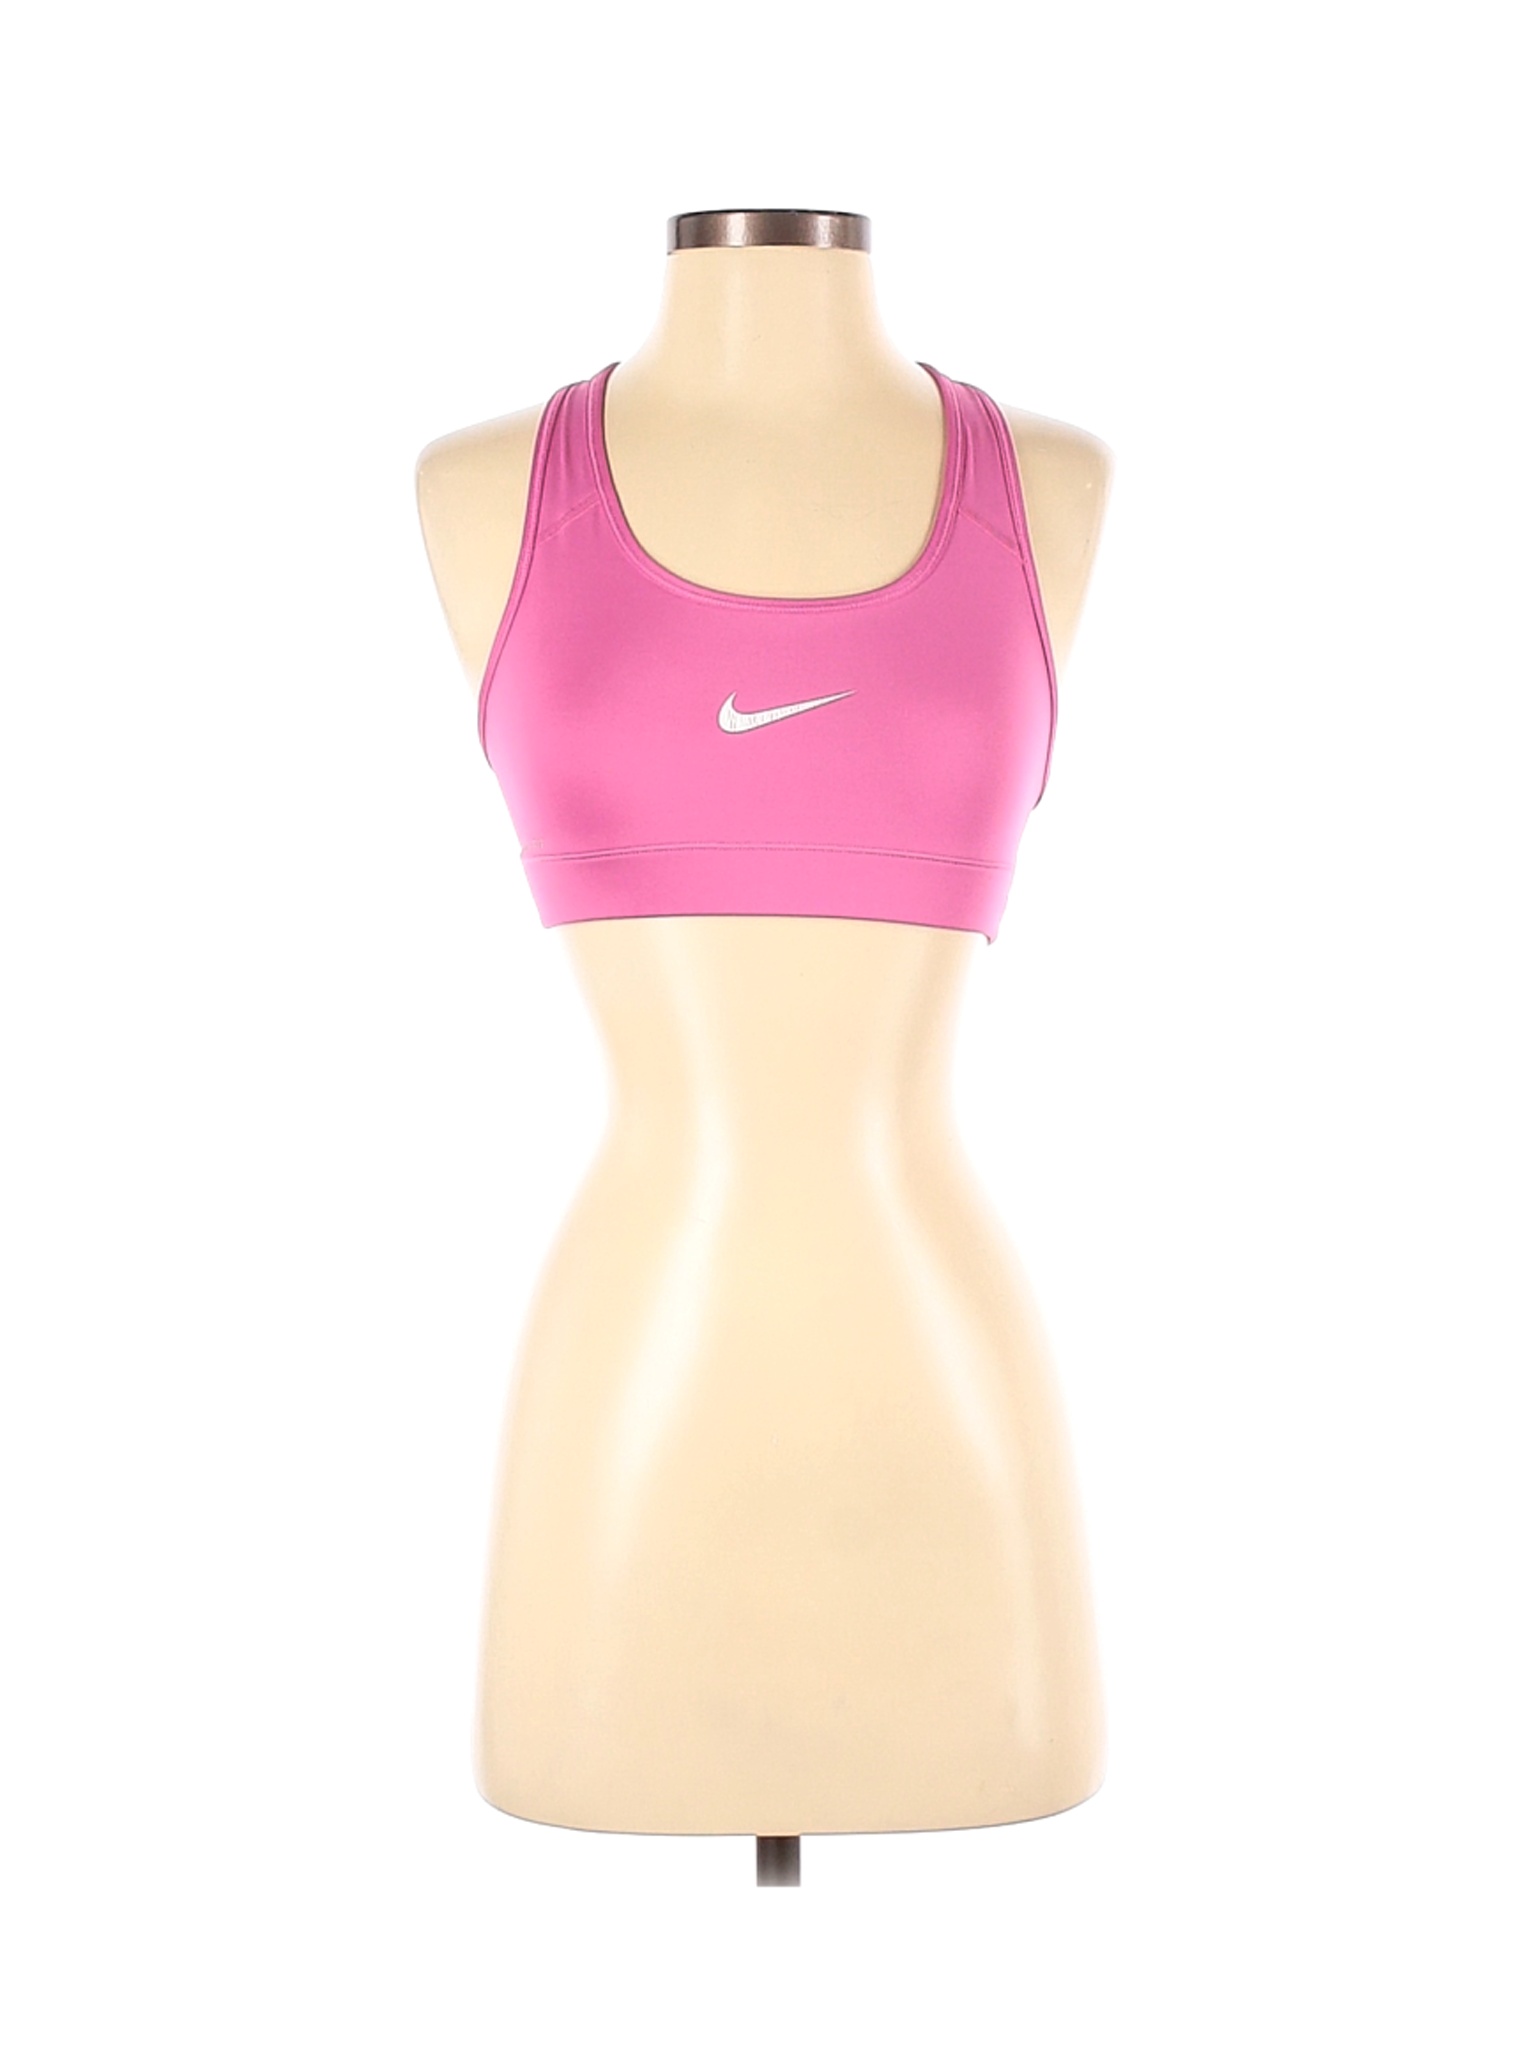 Nike Women Pink Sports Bra XS | eBay